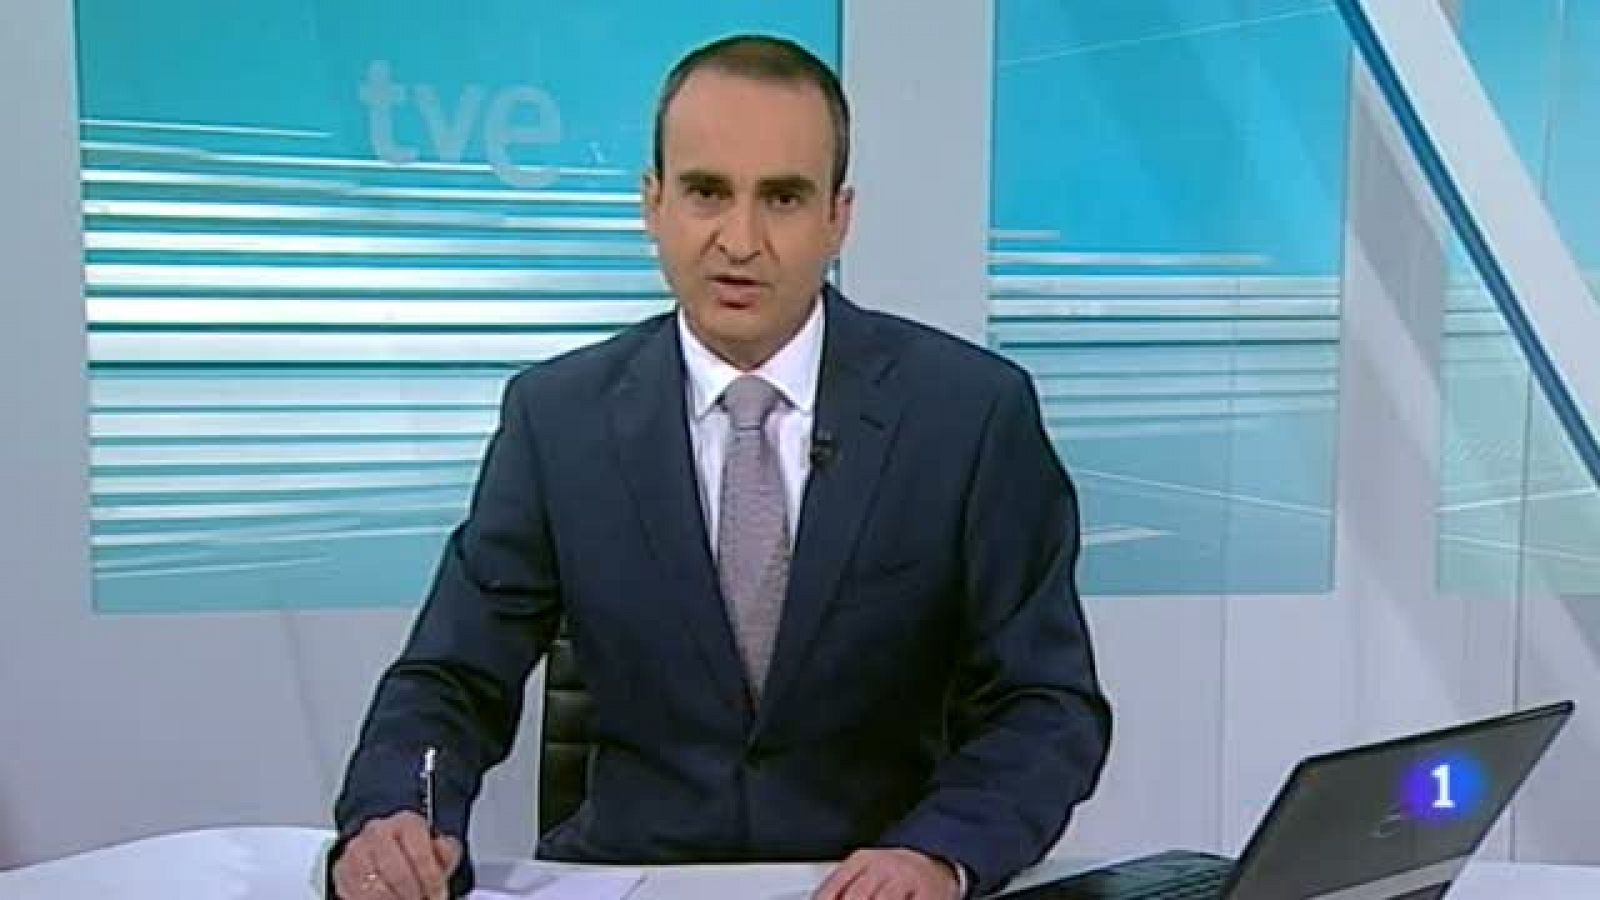 Noticias de Extremadura: Noticias de Extremadura - 31/12/2013 | RTVE Play